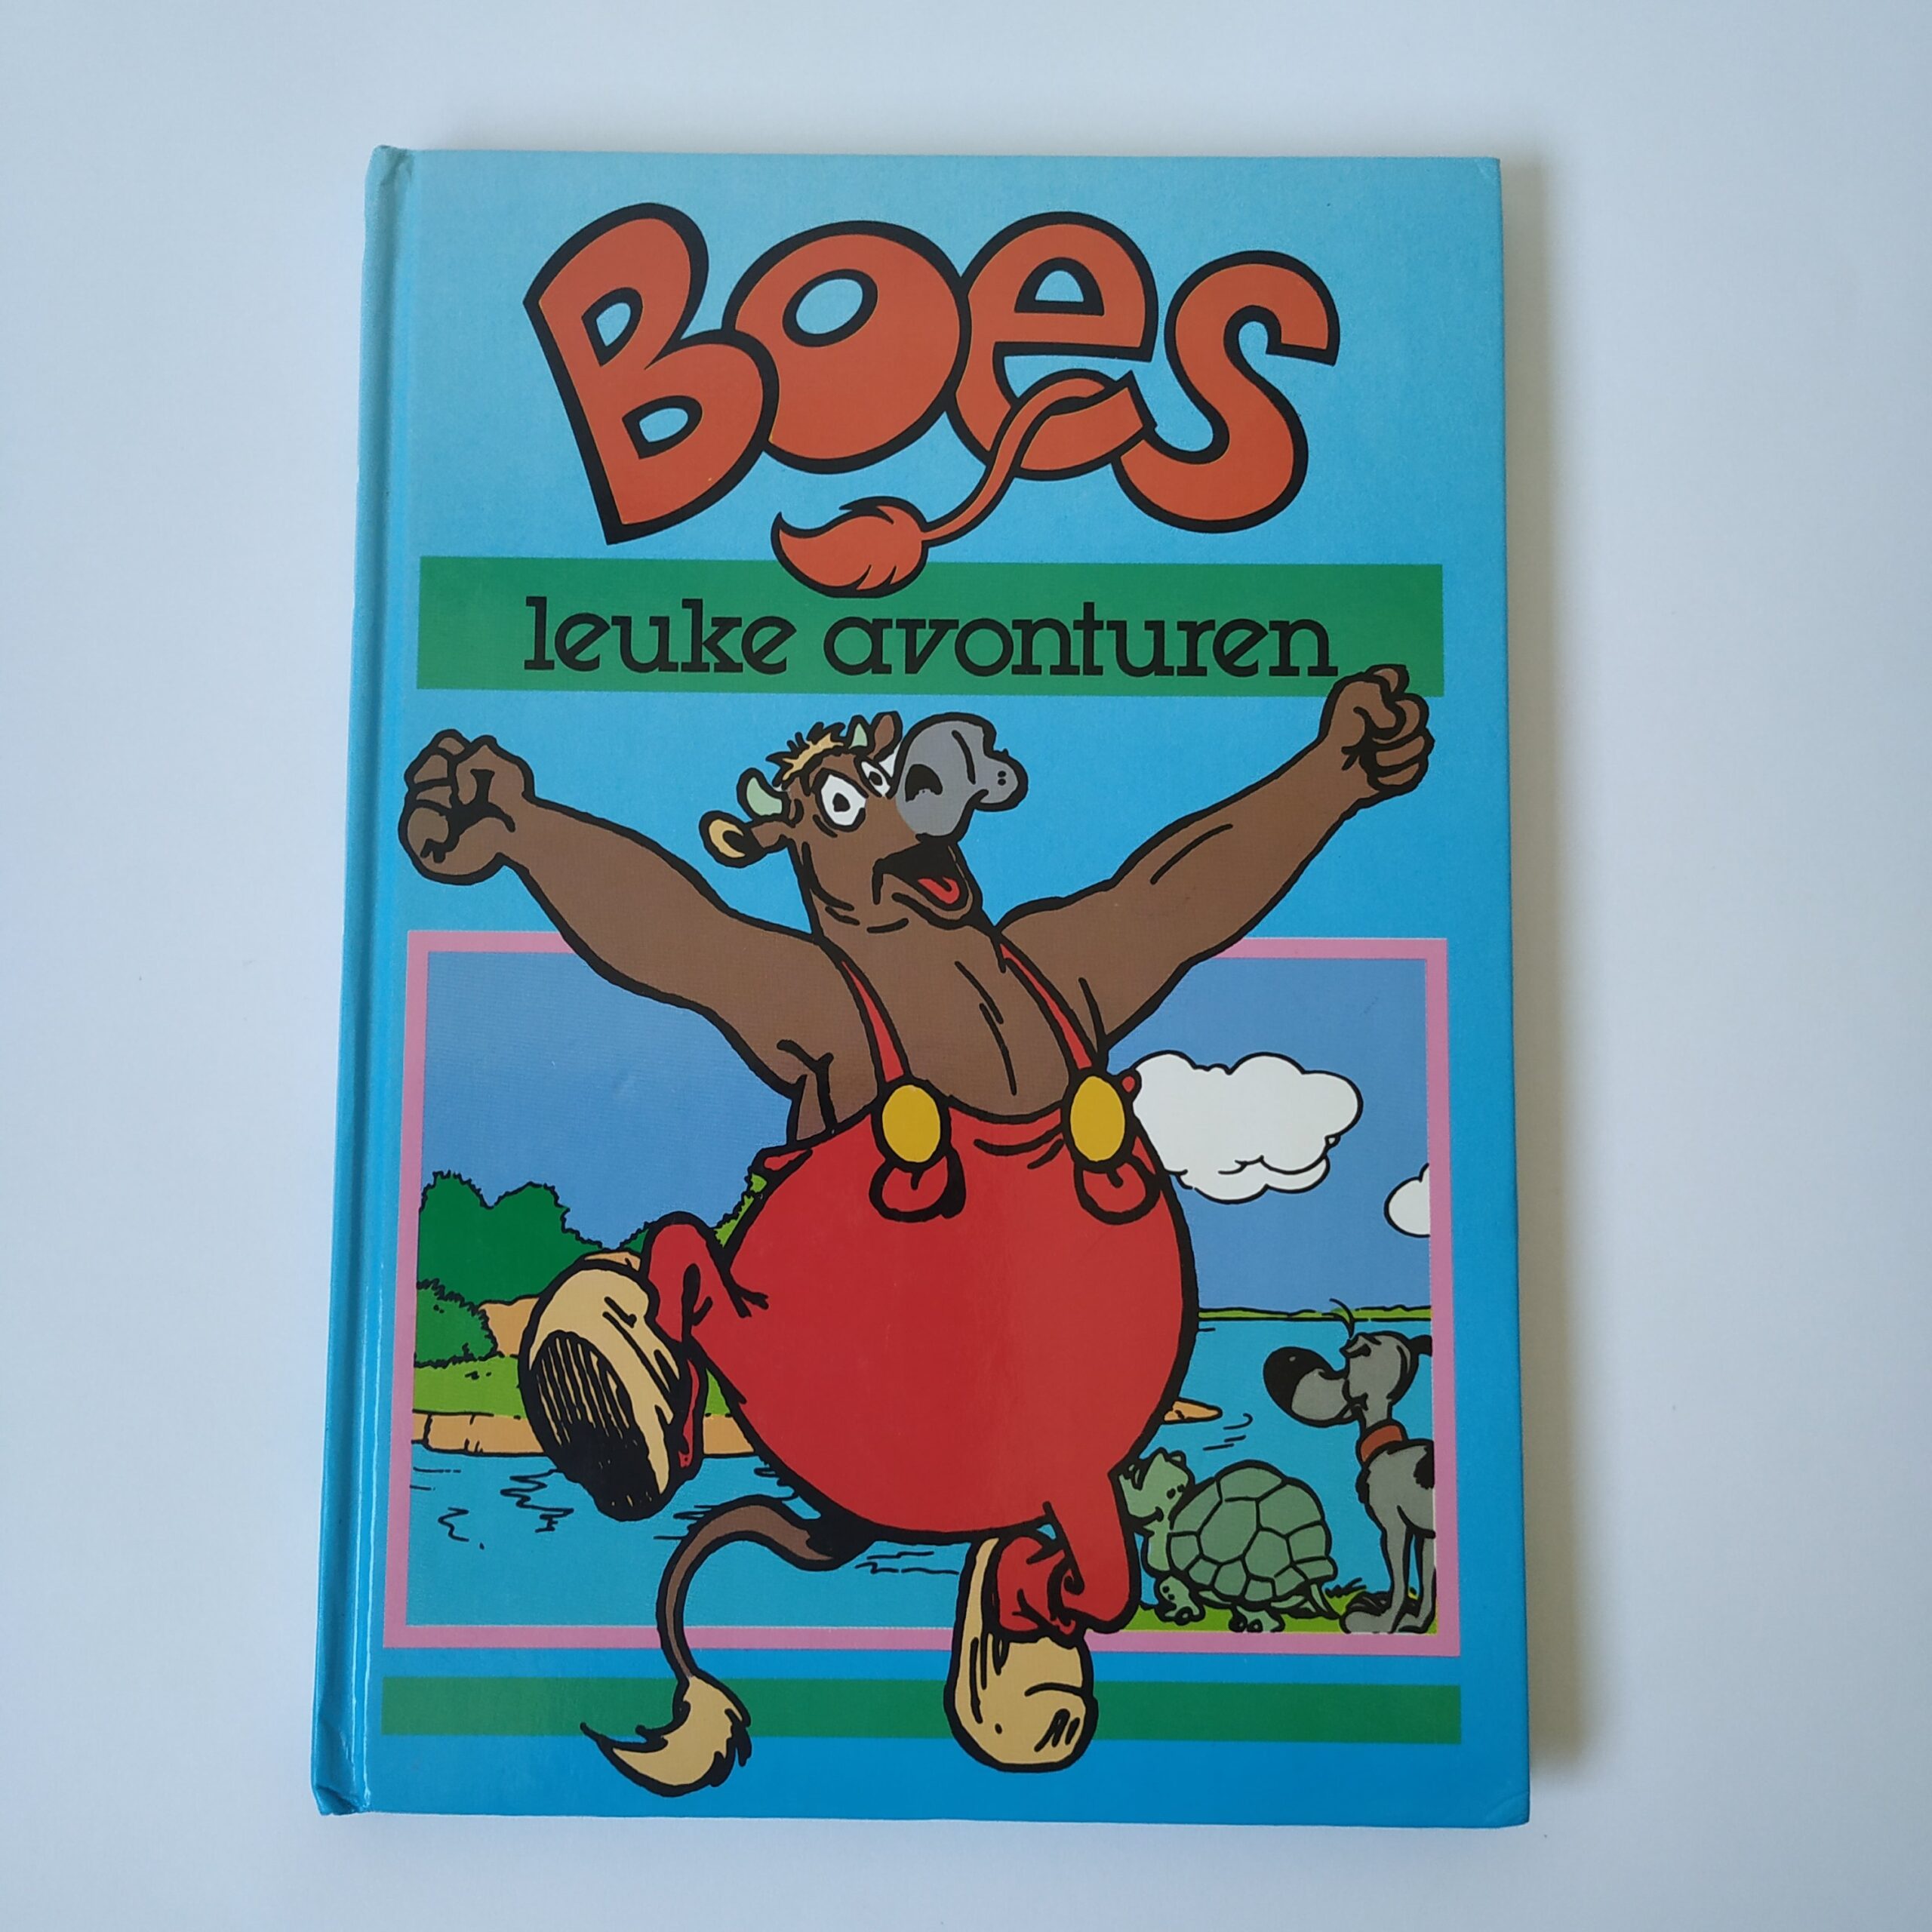 Vintage boek (hardcover) van Boes leuke avonturen uit 1988